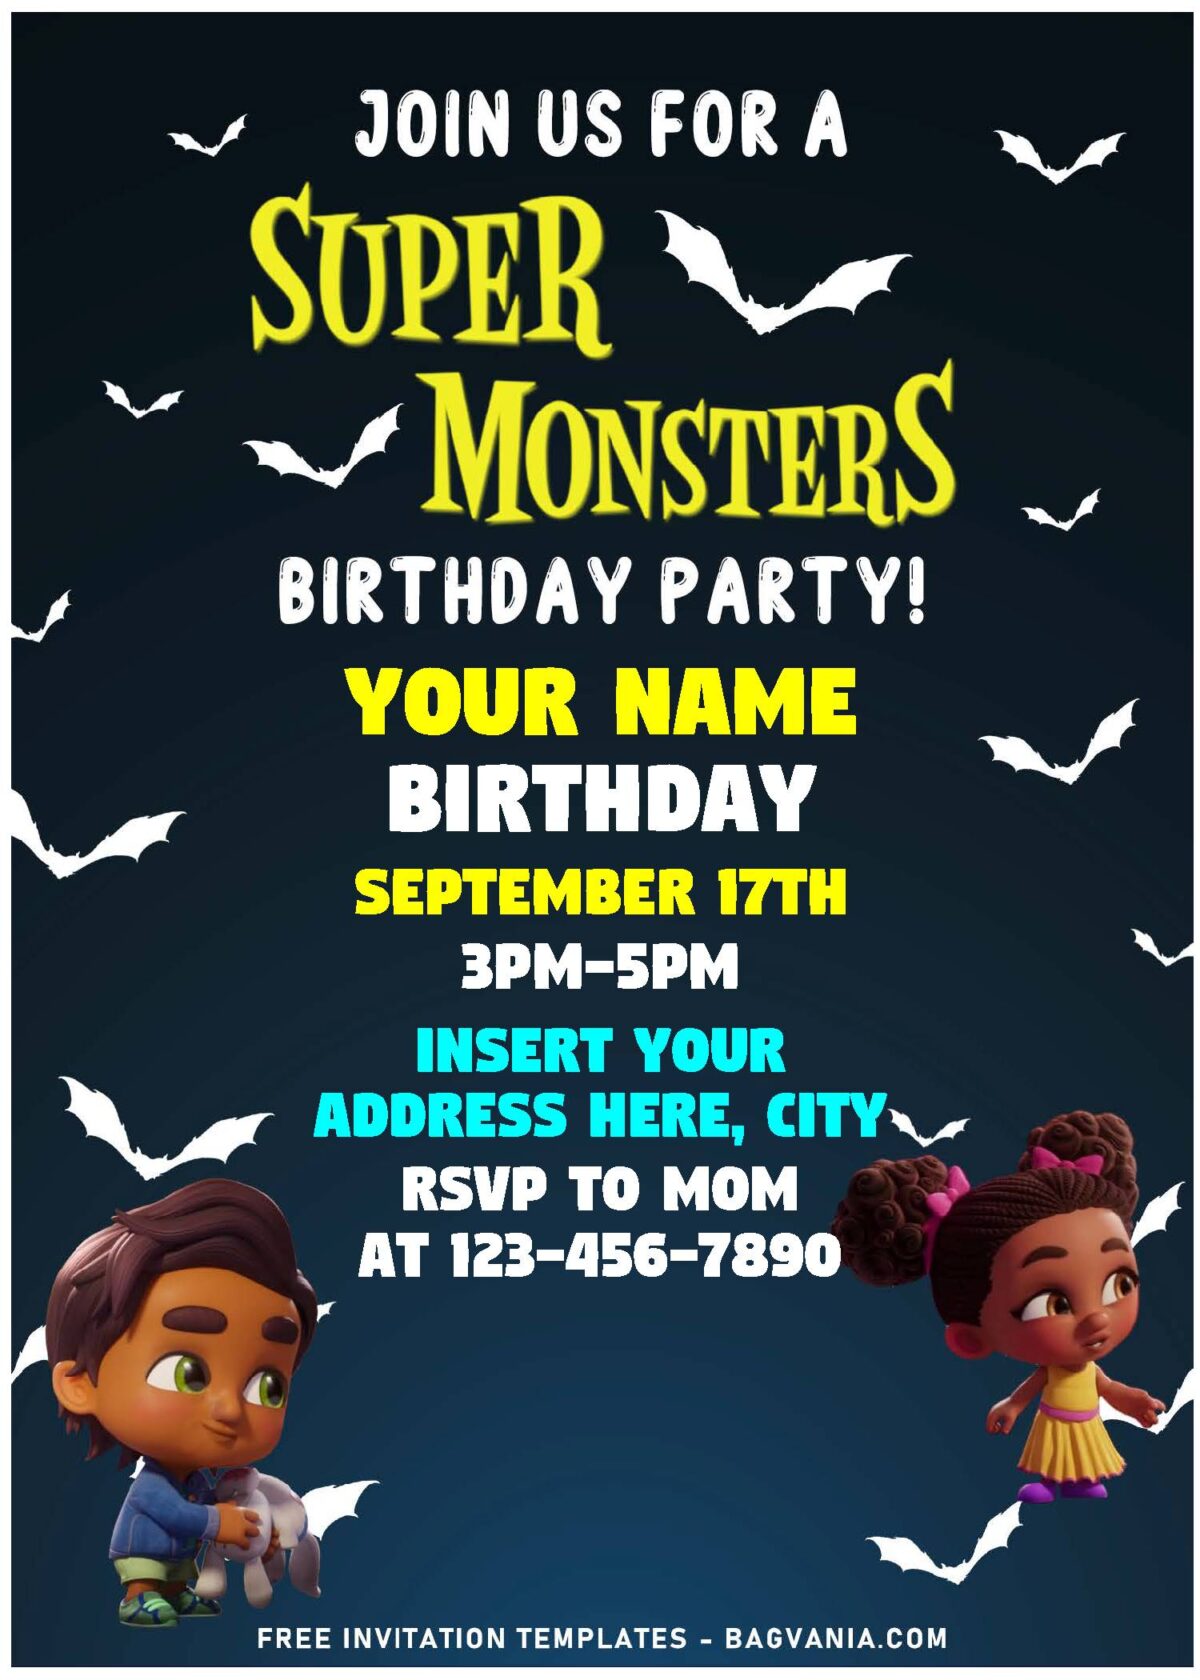 (Free Editable PDF) Spooktacular Super Monster Birthday Invitation Templates with spooky bats